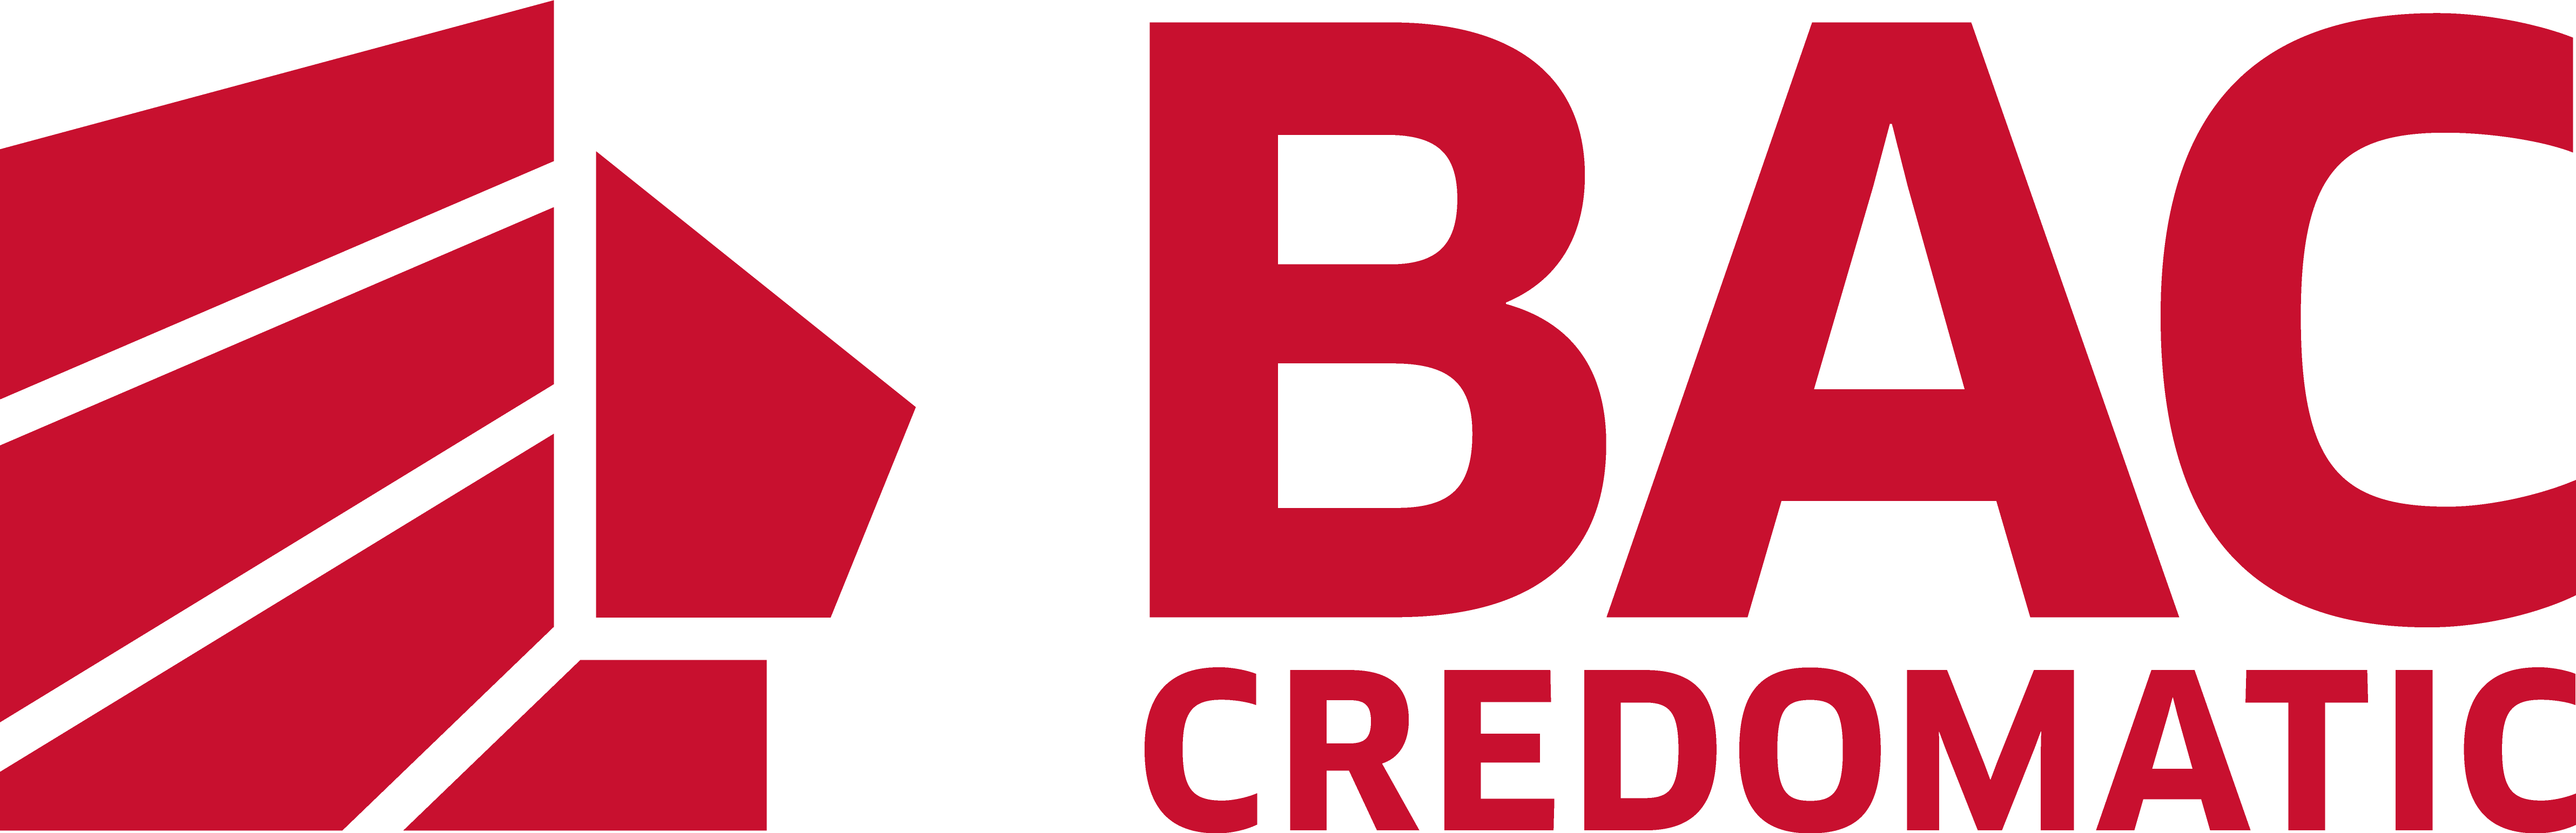 BAC credomatic logo